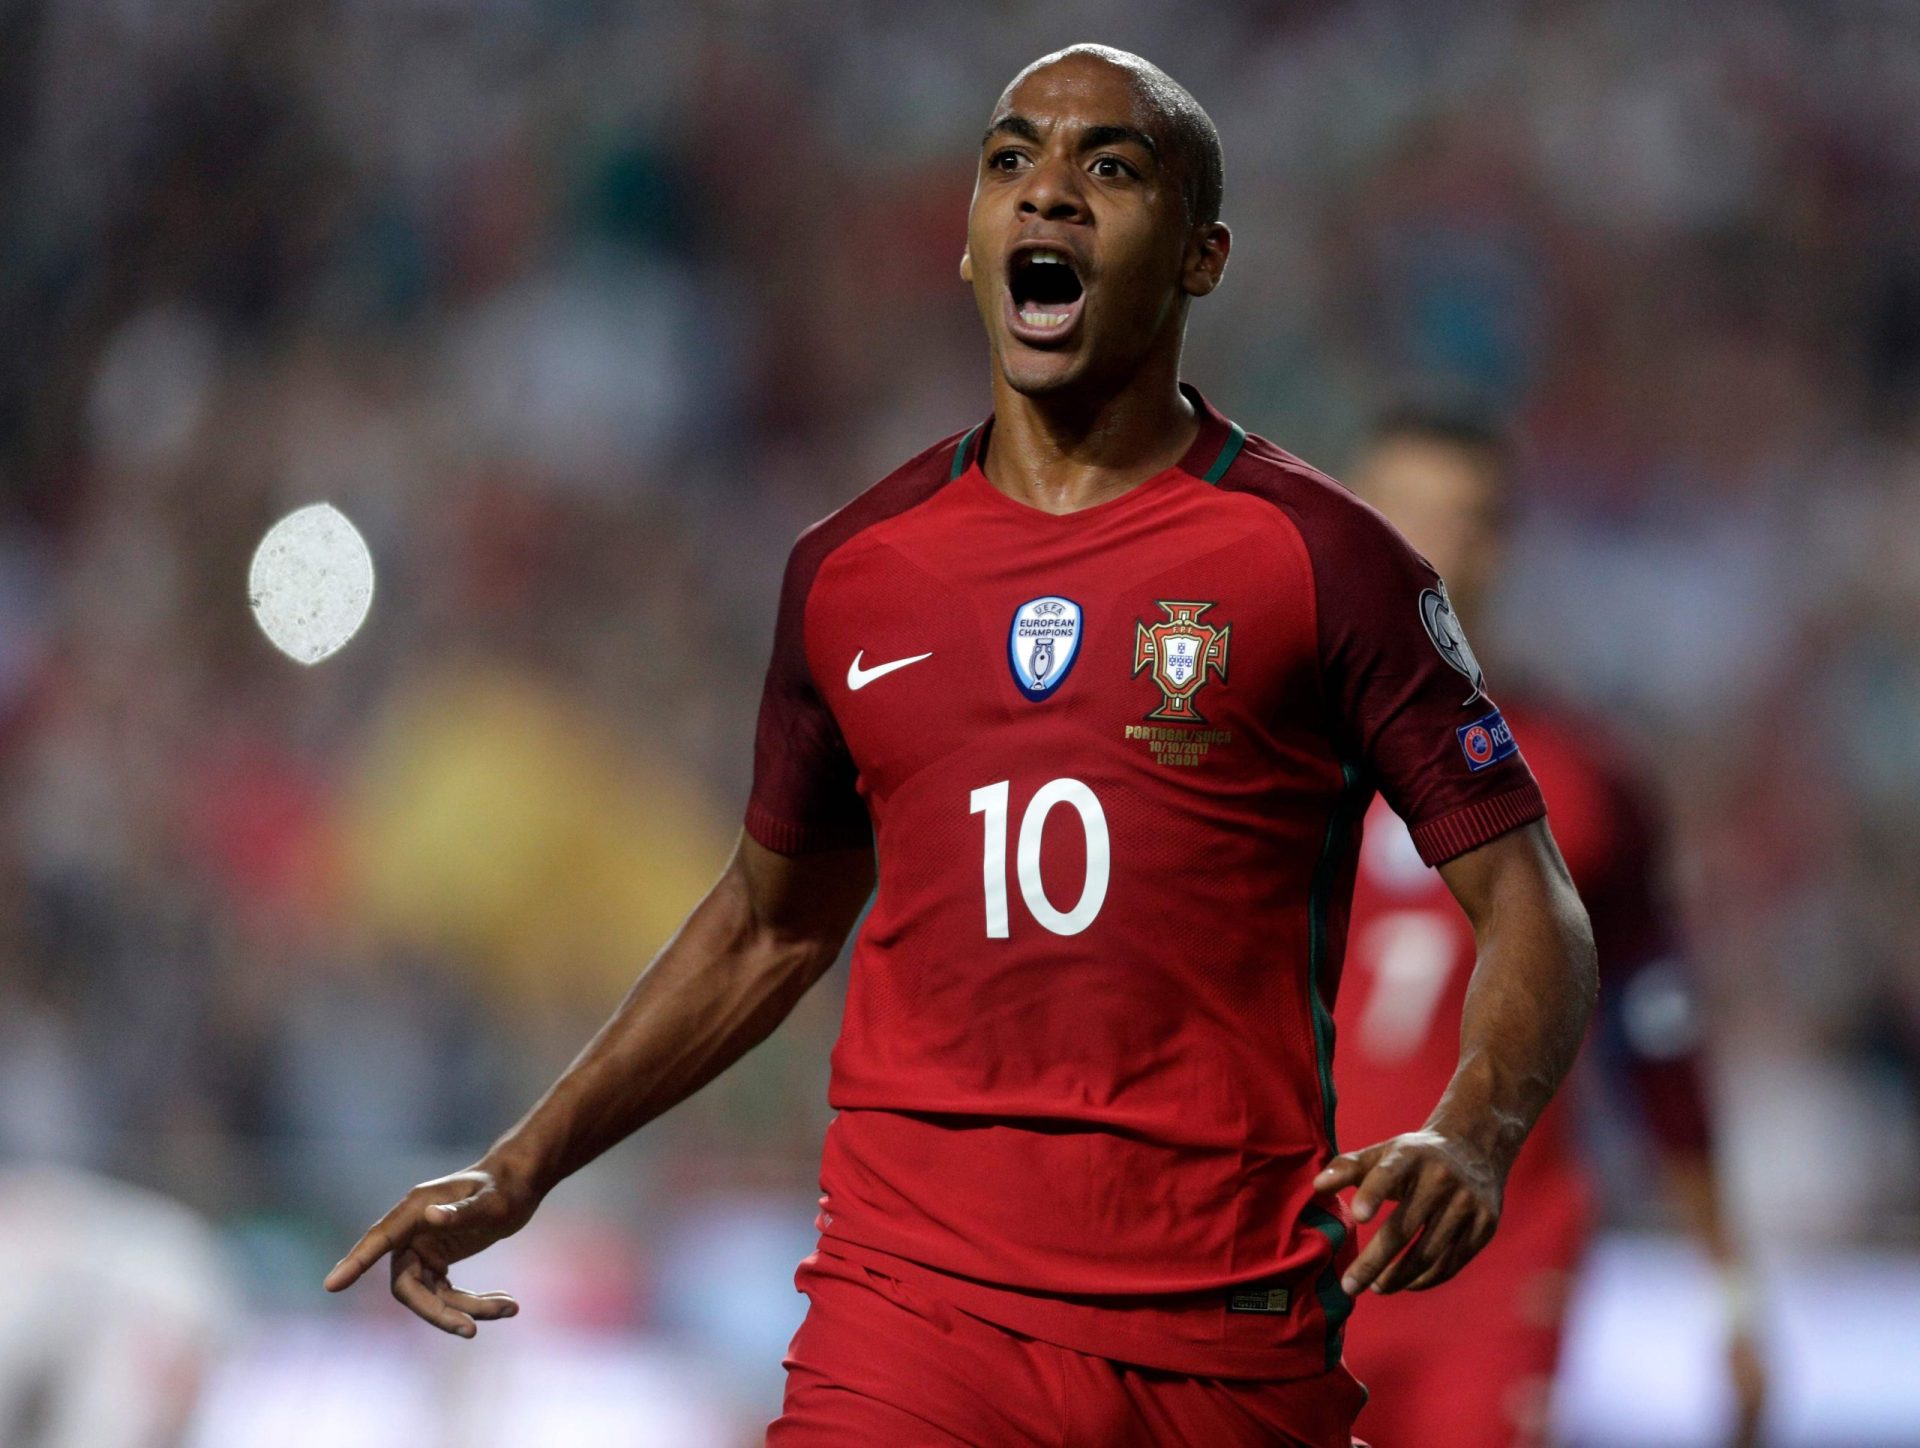 Portugal – Suíça. 2-0 para Portugal